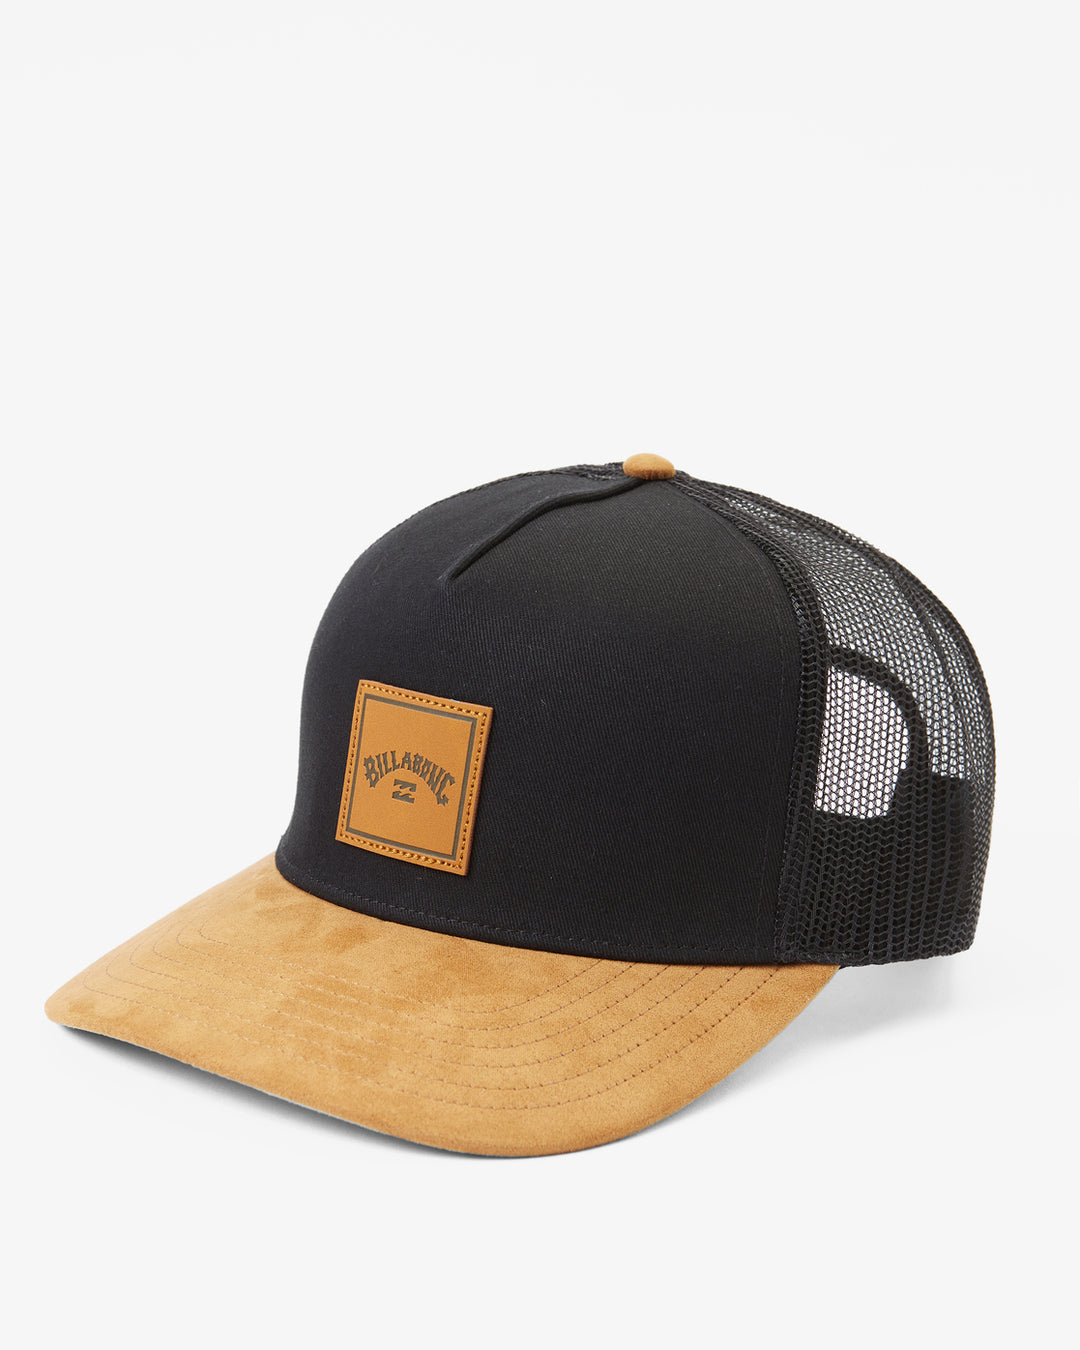 Boardshop Hat Diego – Billabong Sun Trucker Stacked - Black/Tan